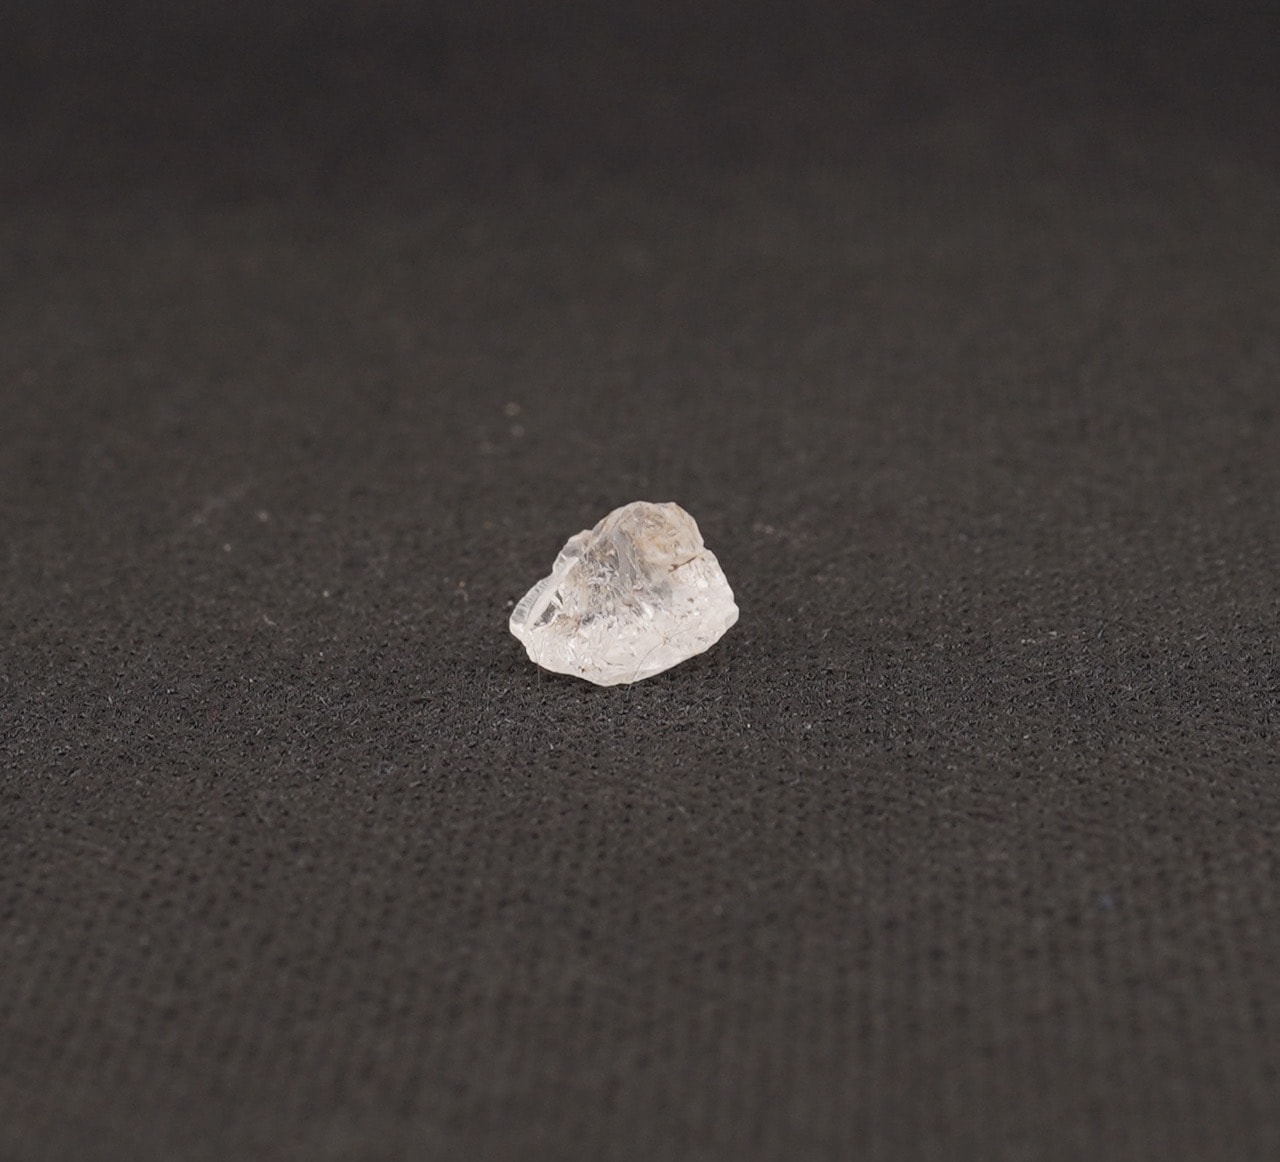 Fenacit nigerian cristal natural unicat f271